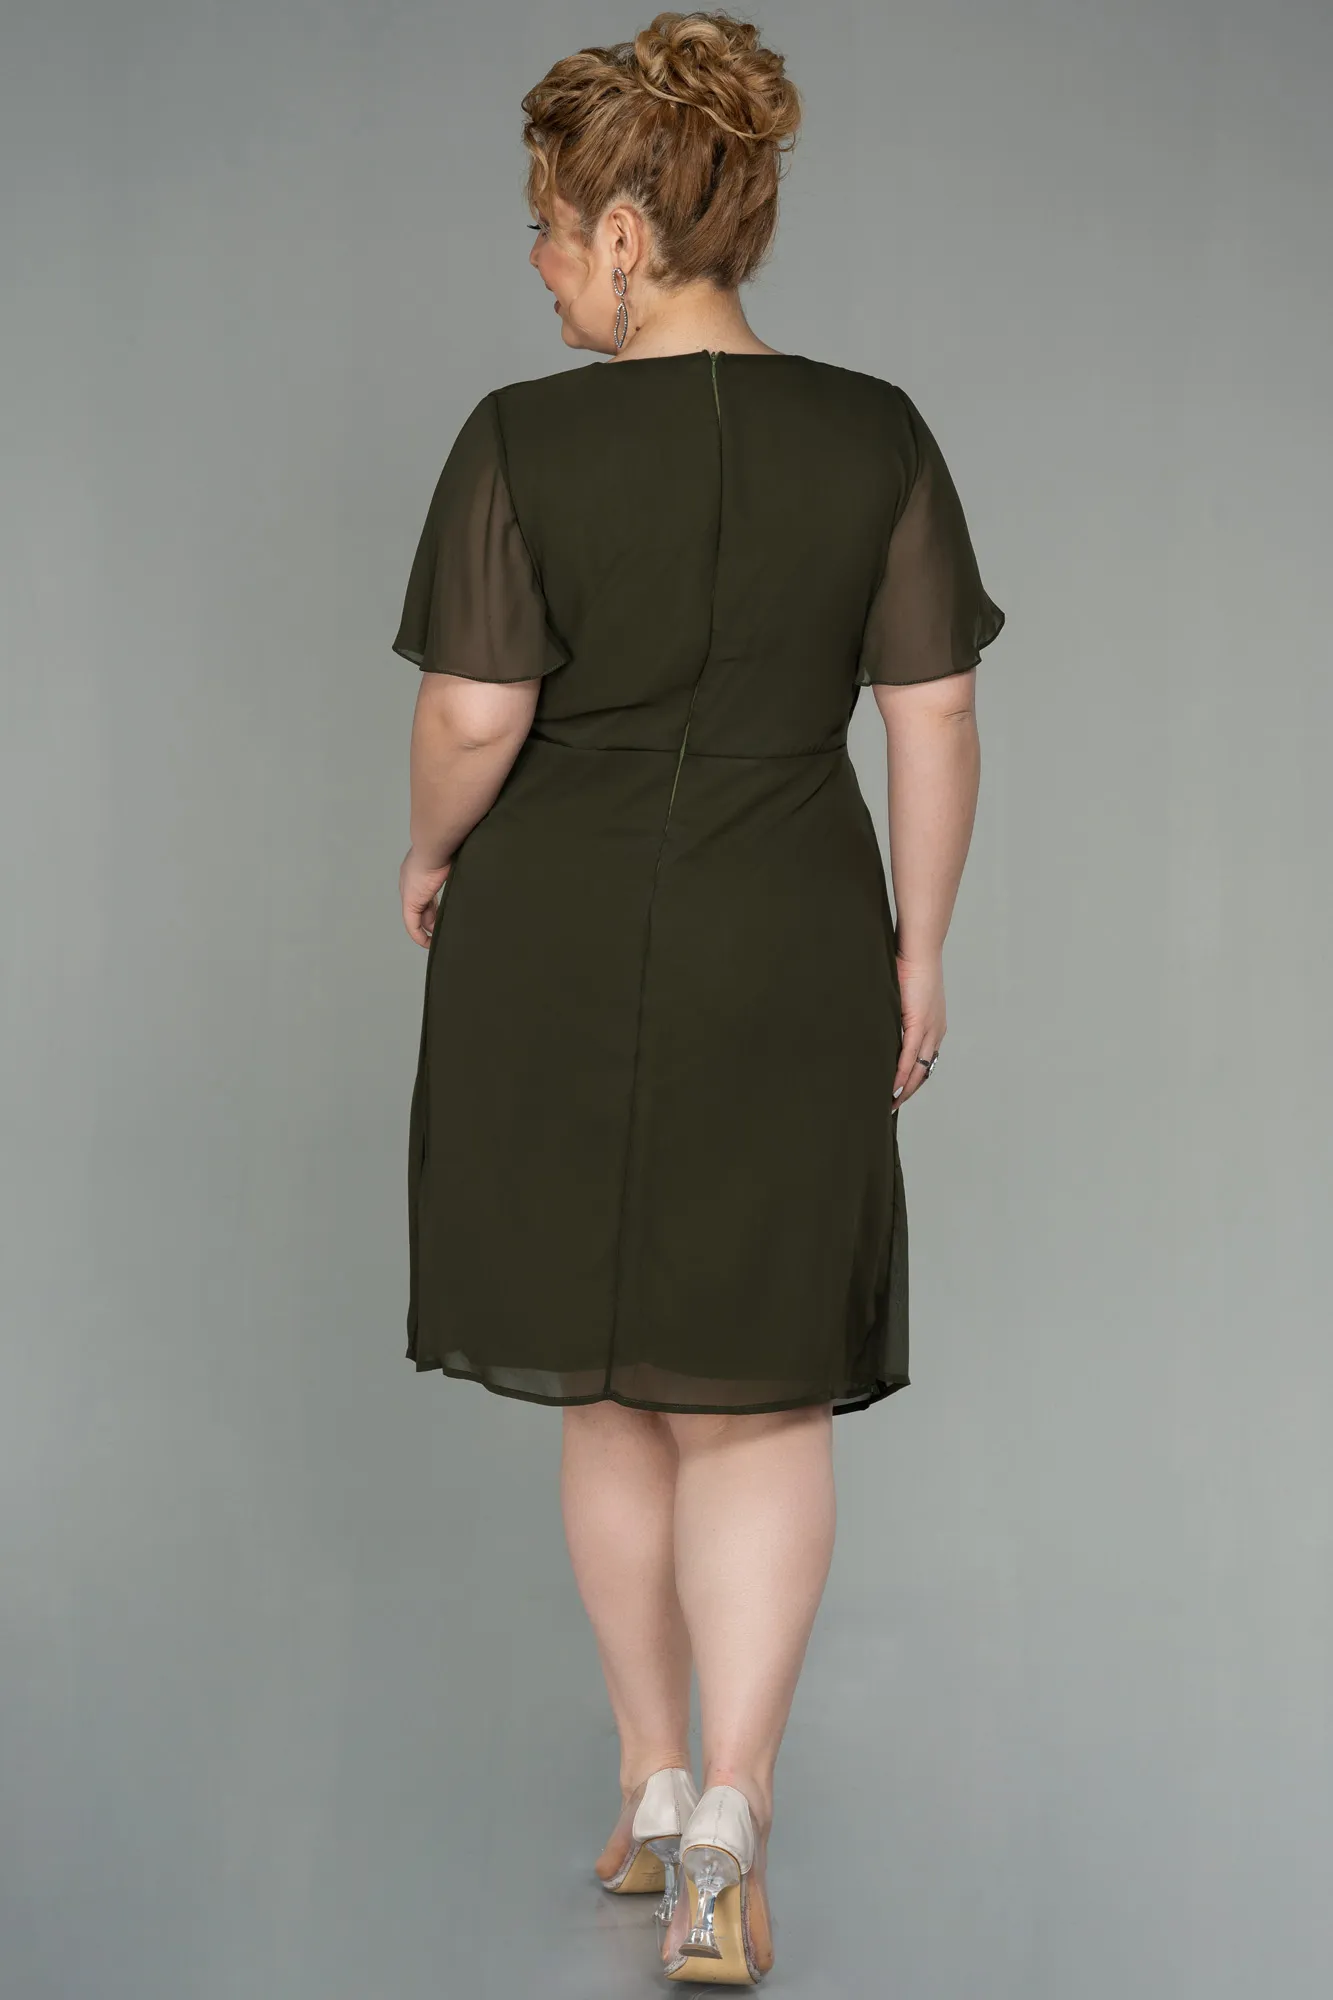 Olive Drab-Midi Chiffon Plus Size Evening Dress ABK1660